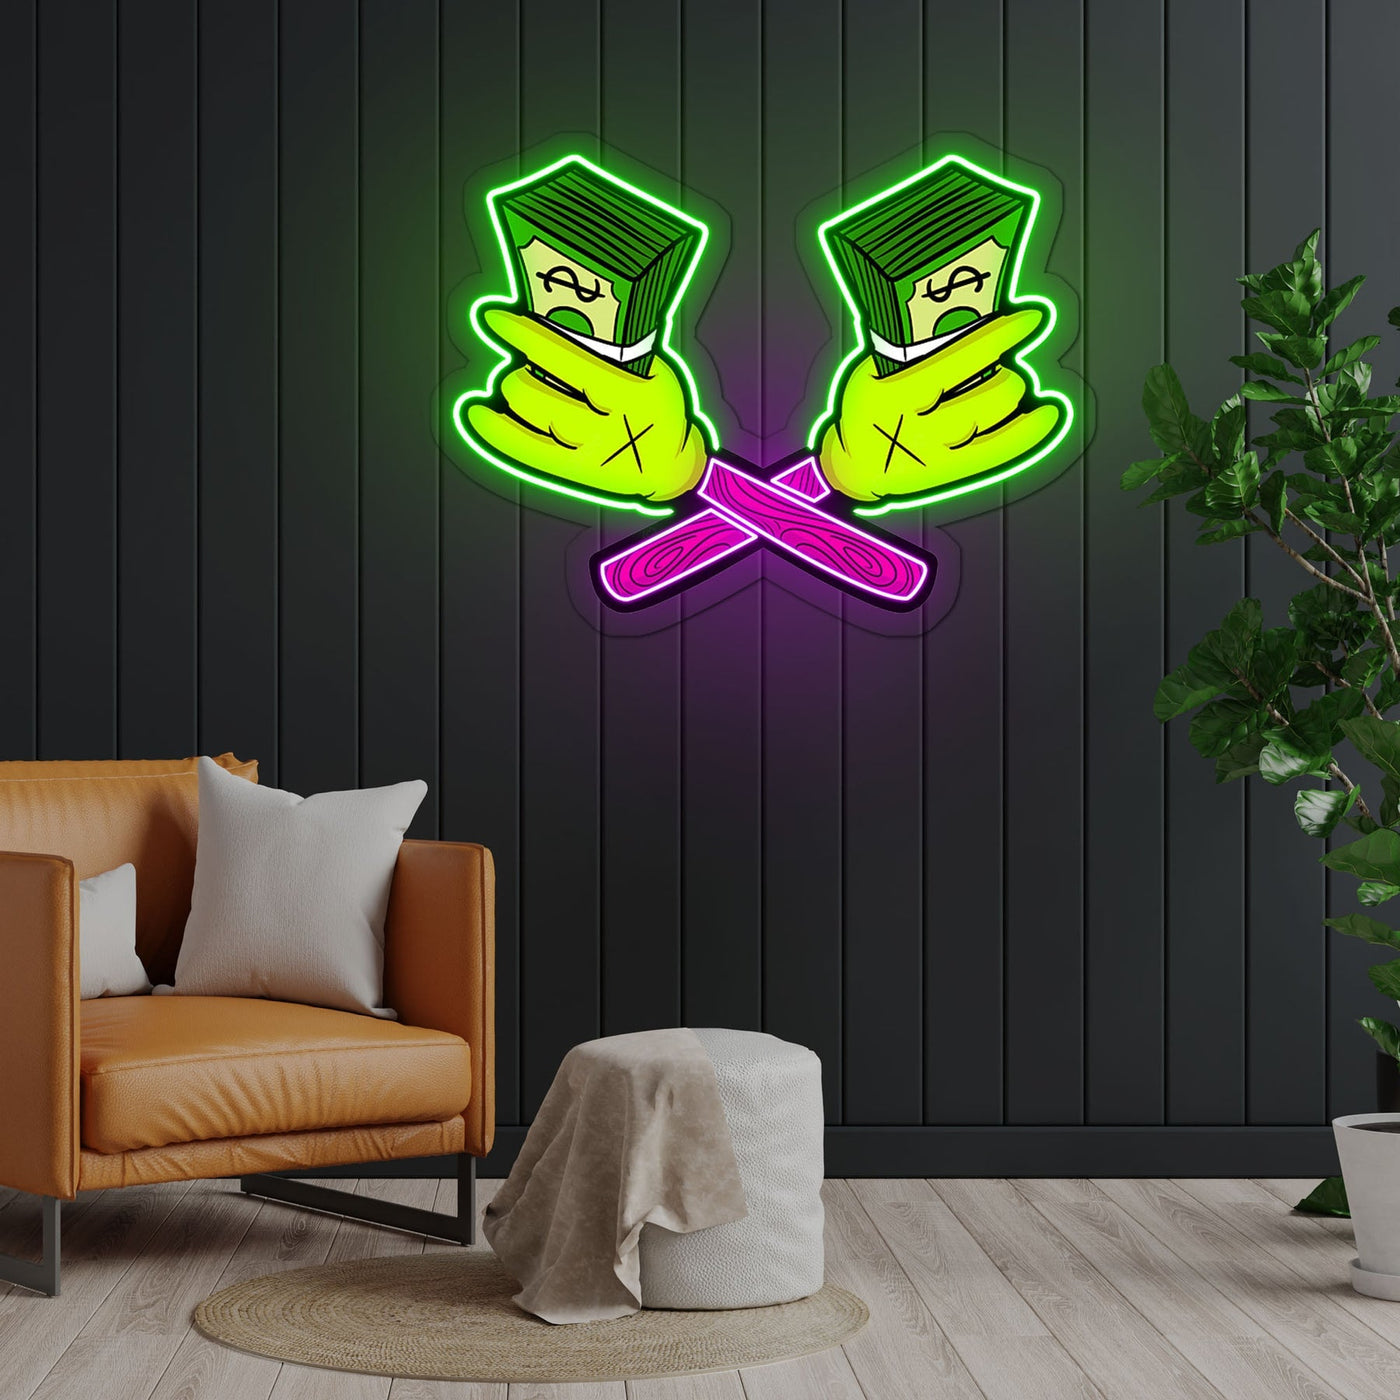 Money Cartoon Neon Sign x Acrylic Artwork - 20”LED Neon x Acrylic Print